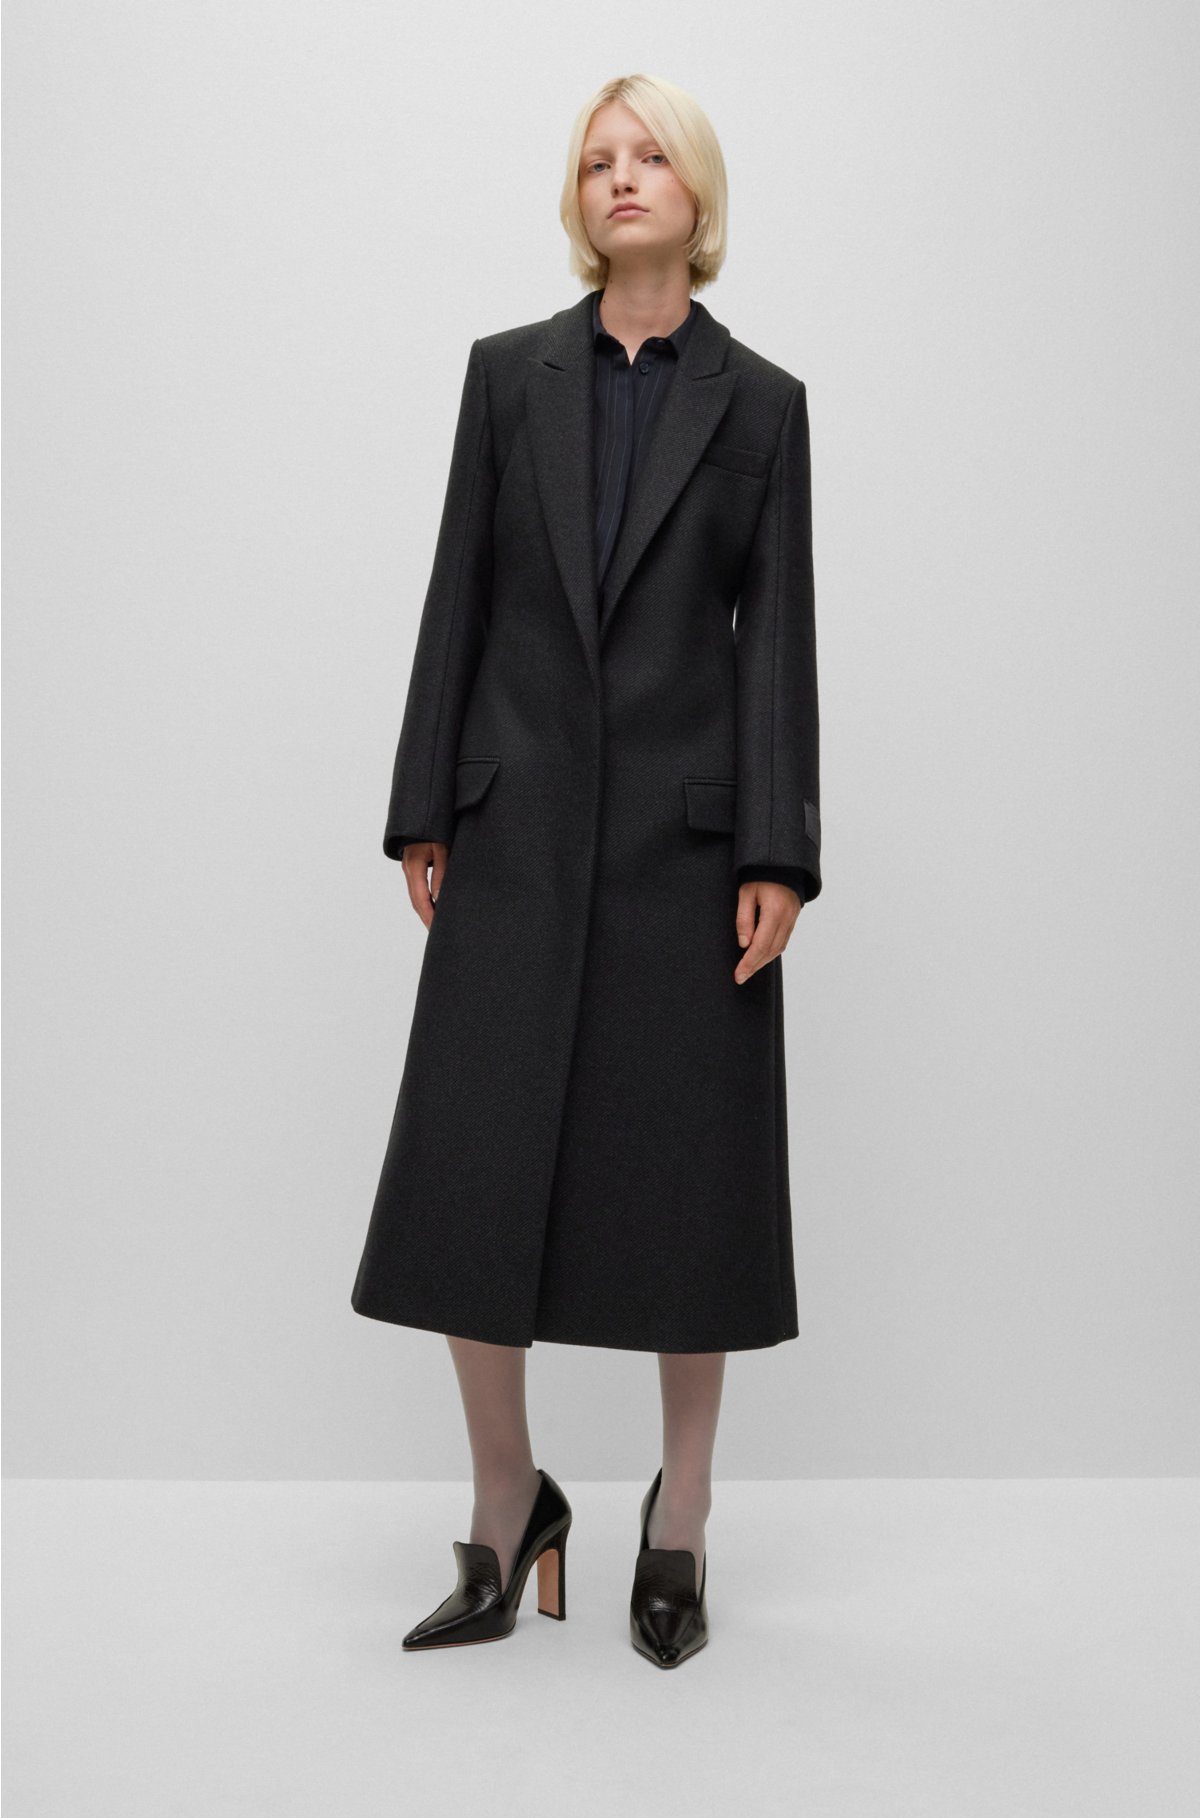 Trench coat LV Louis Vuitton - 121 Brand Shop